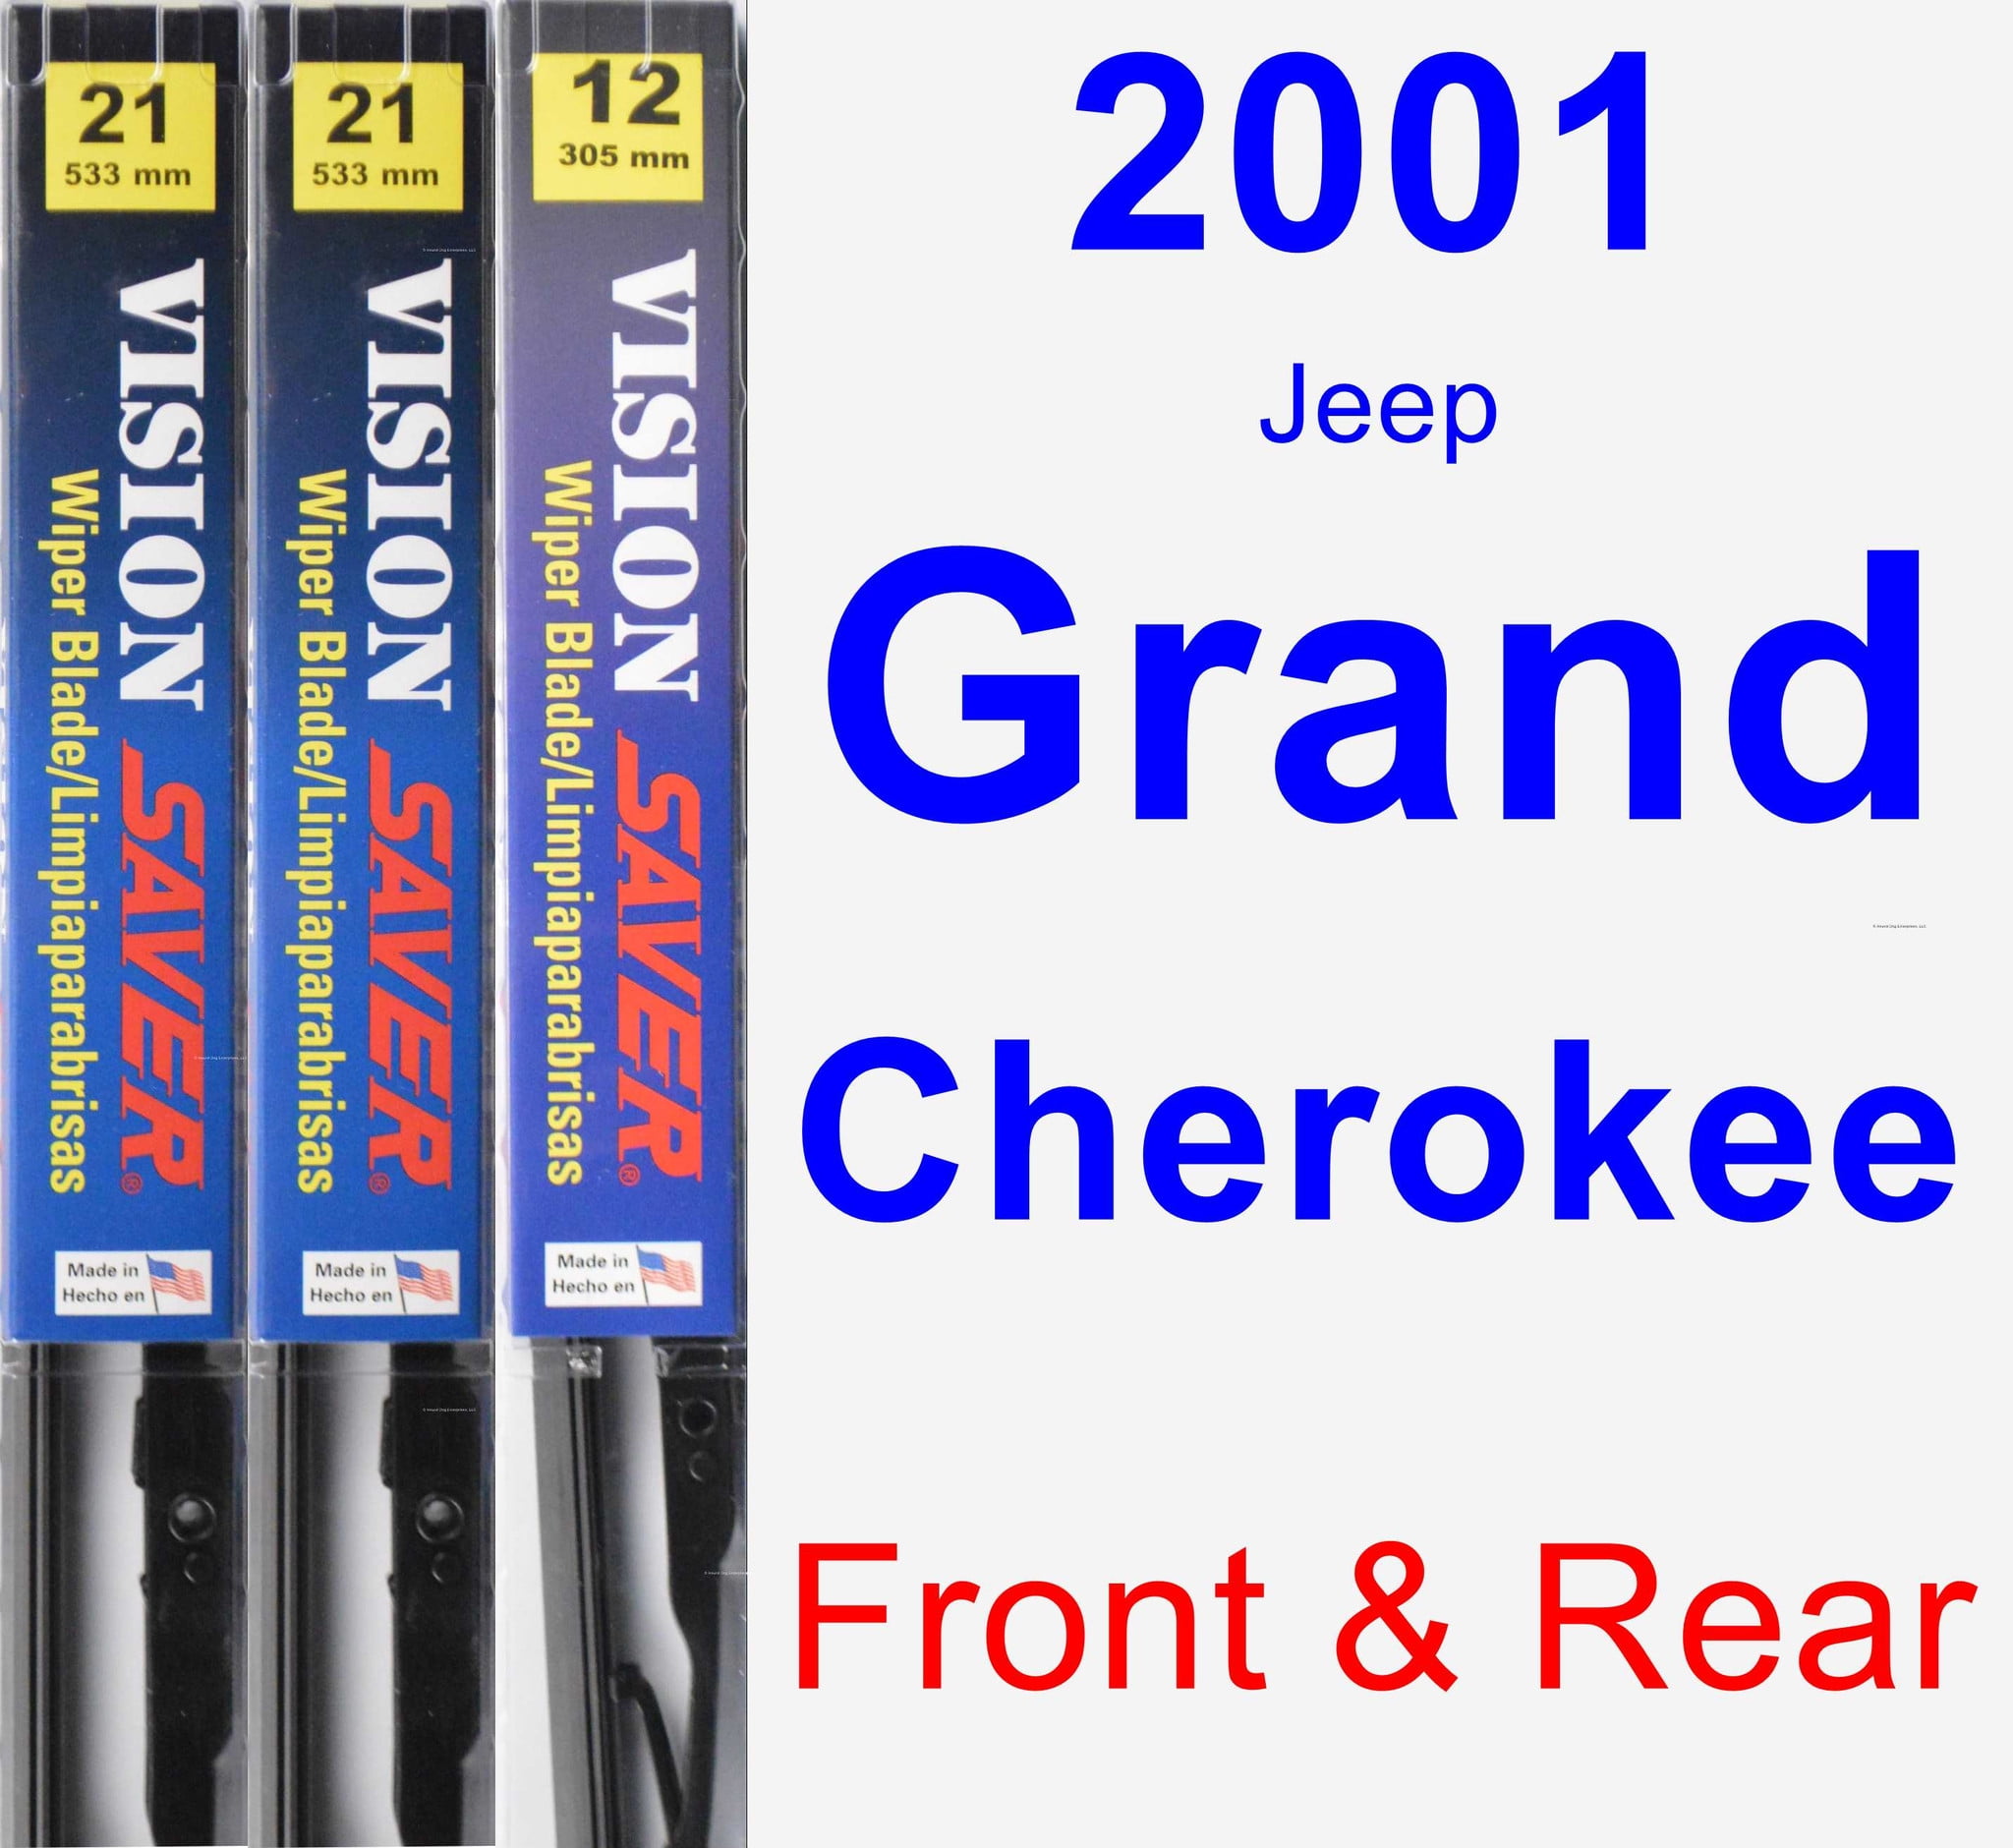 2001 Jeep Grand Cherokee Wiper Blade Set/Kit (Front & Rear) (3 Blades) - Vision Saver - Walmart 2001 Jeep Grand Cherokee Rear Wiper Blade